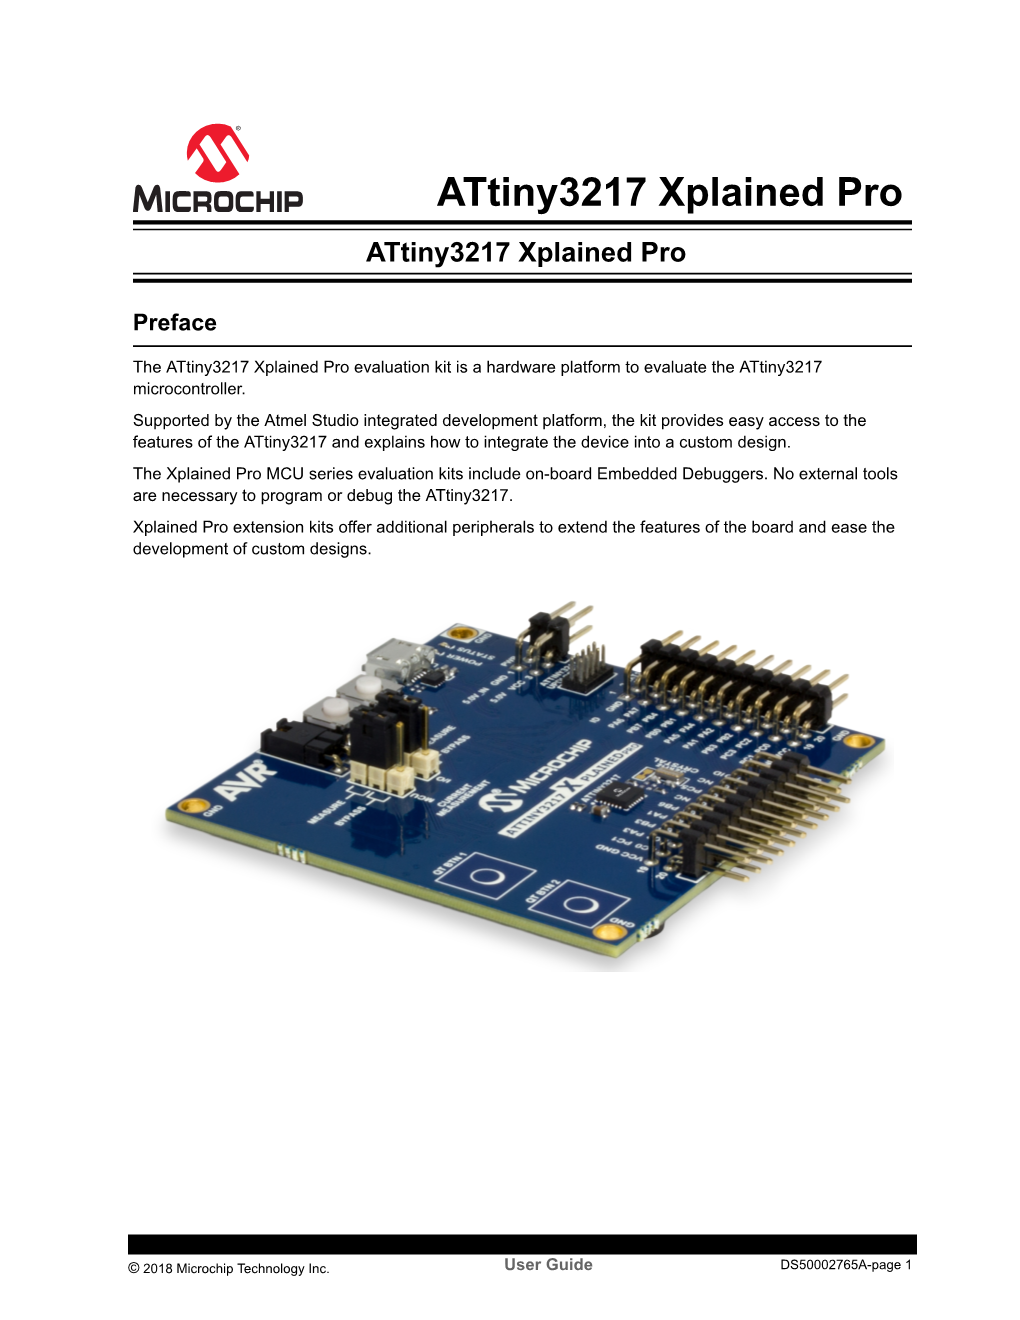 Attiny3217 Xplained Pro Attiny3217 Xplained Pro